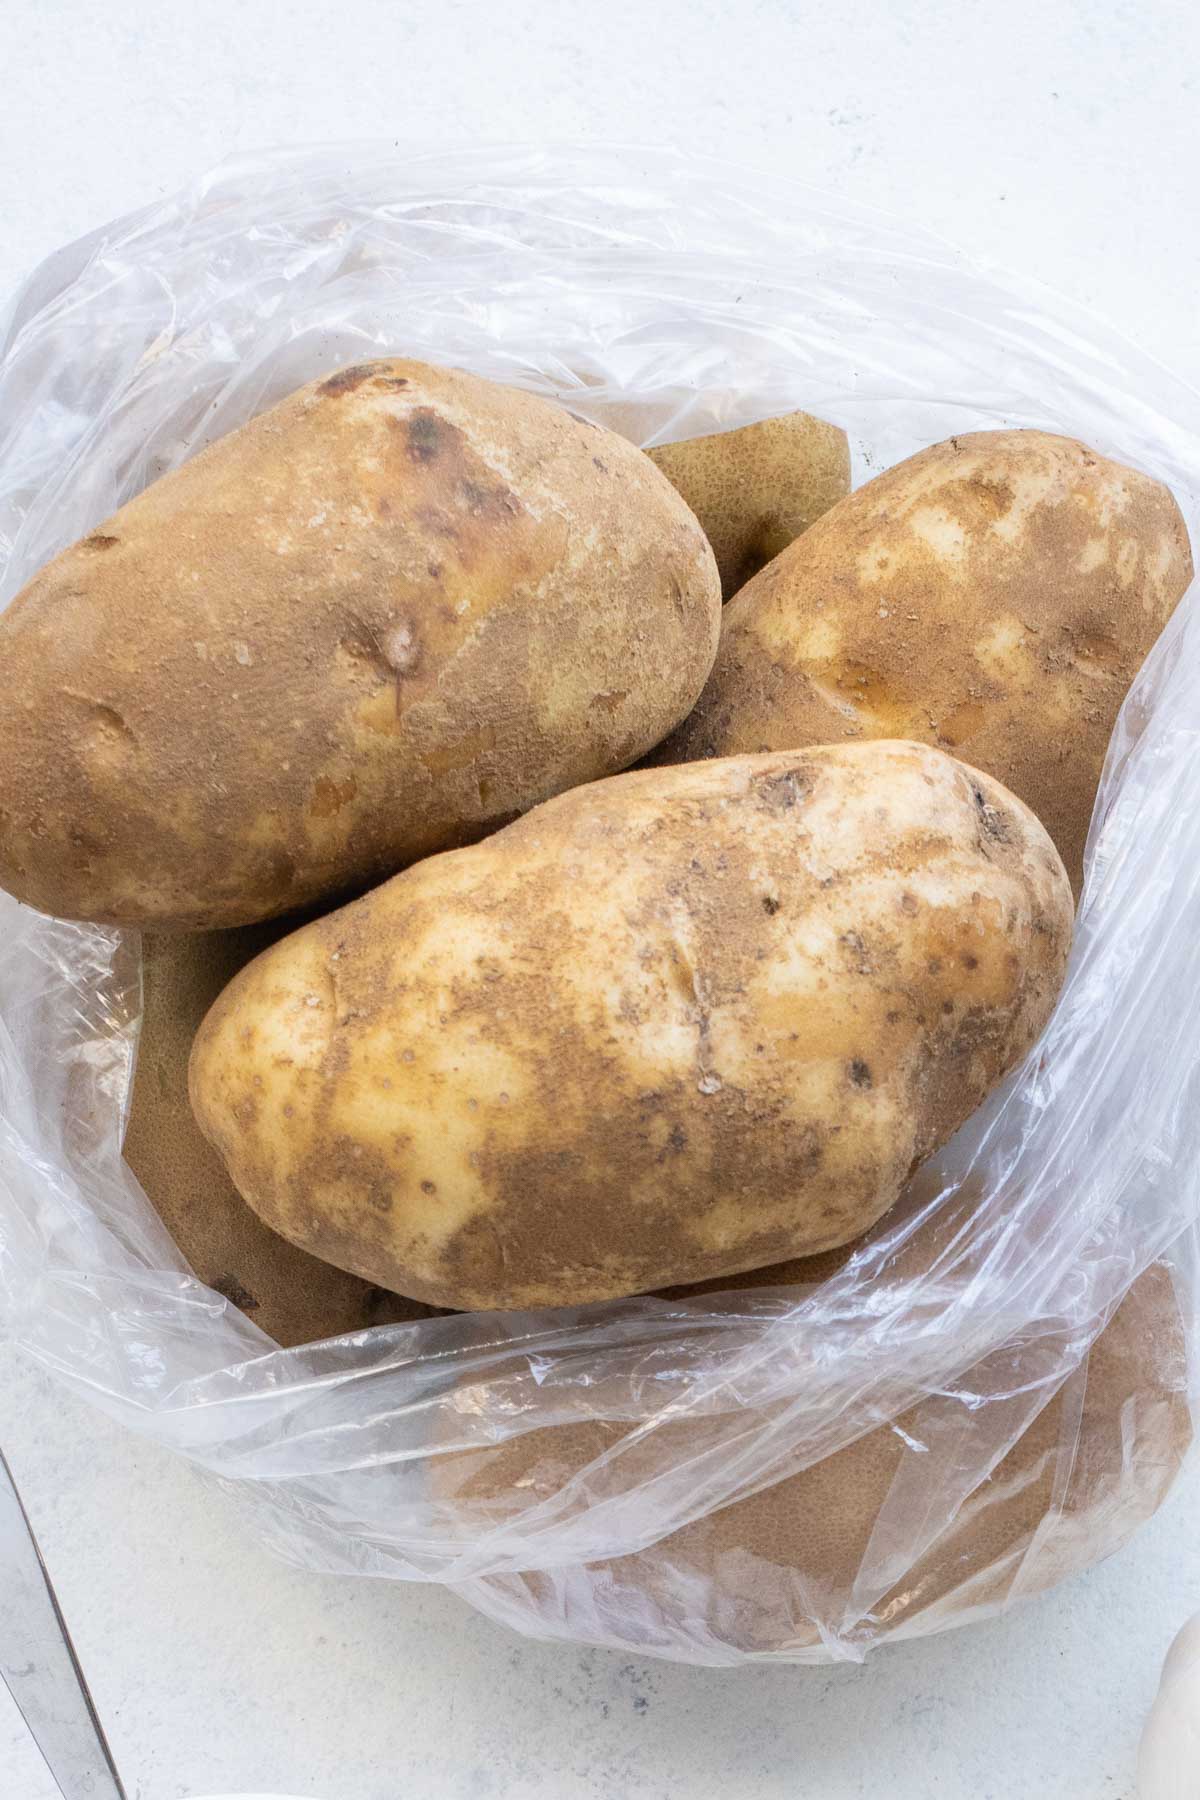 A bag full of russet potatoes.